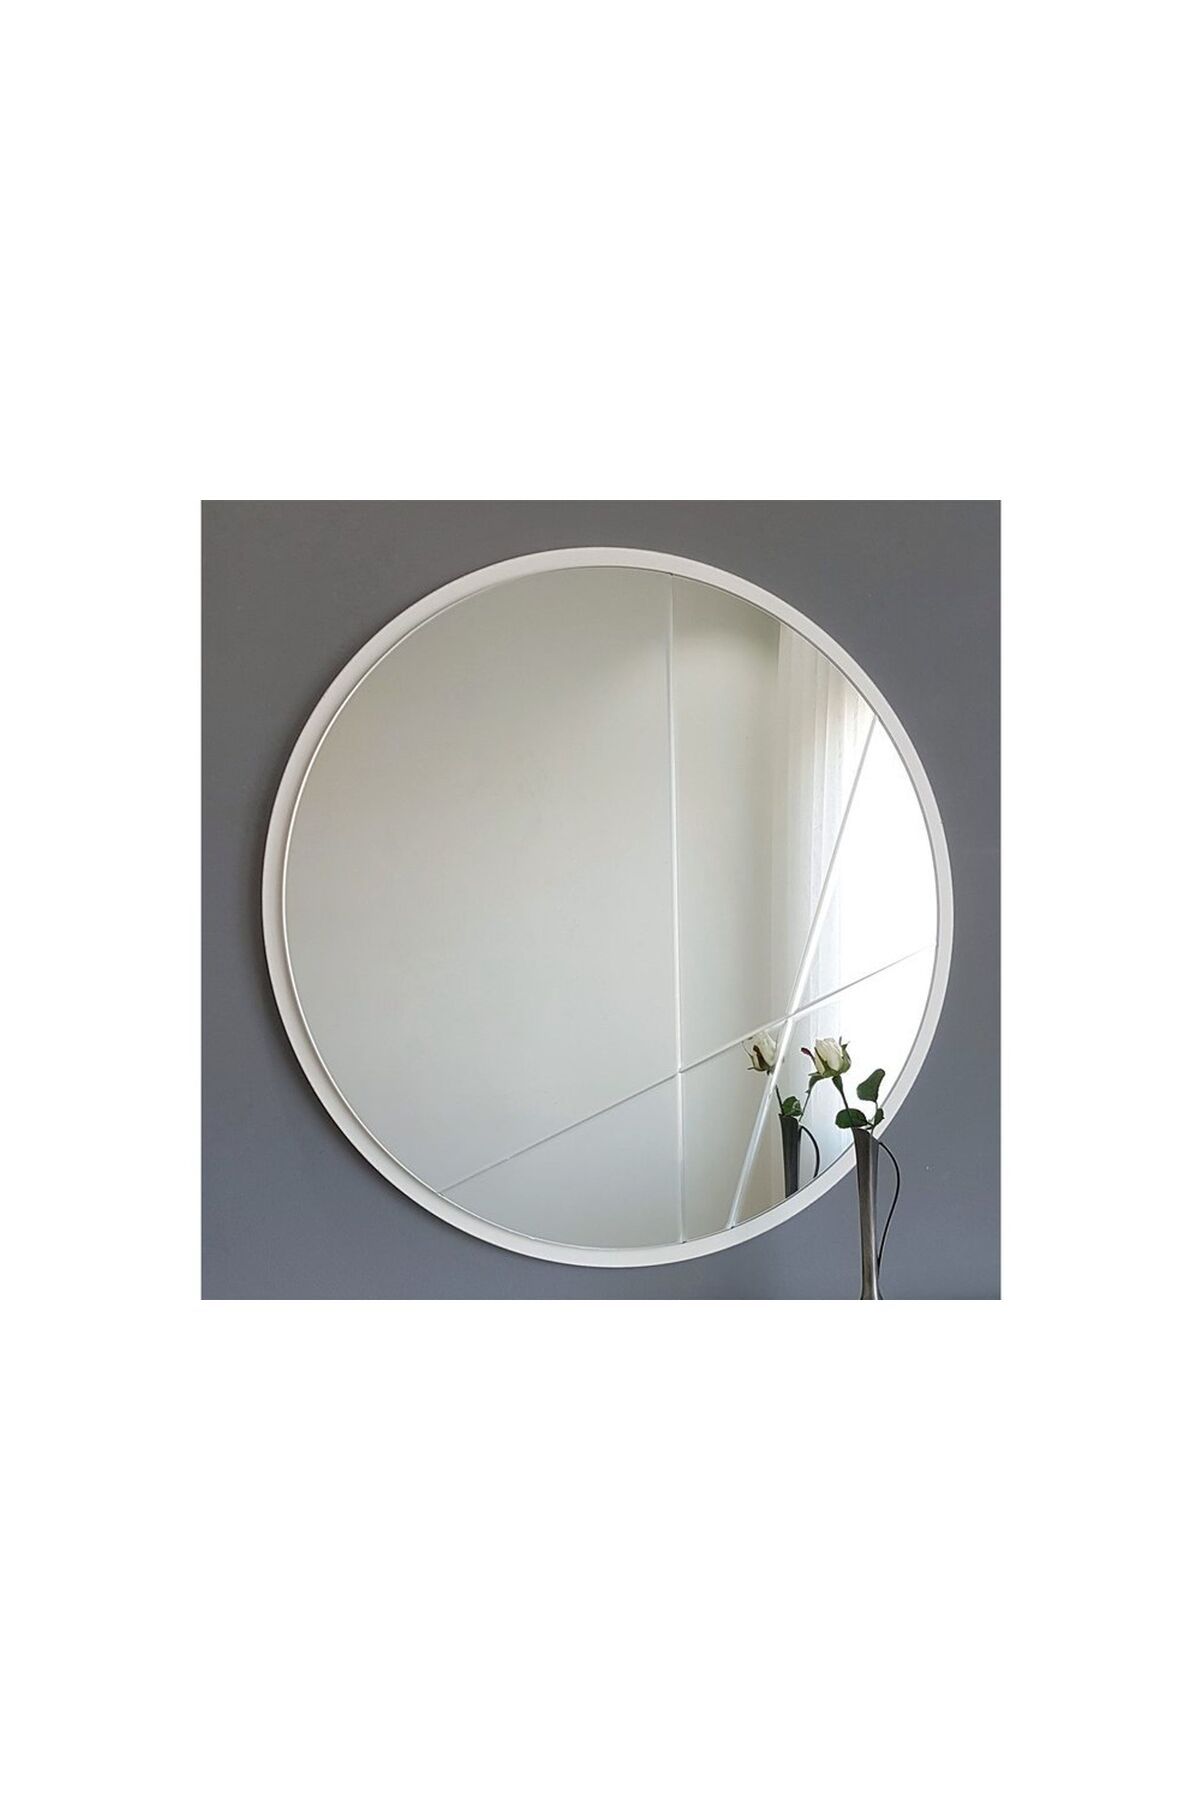 Vivense Neostill Dekoratif Ayna Modern Desen 60cm Yuvarlak